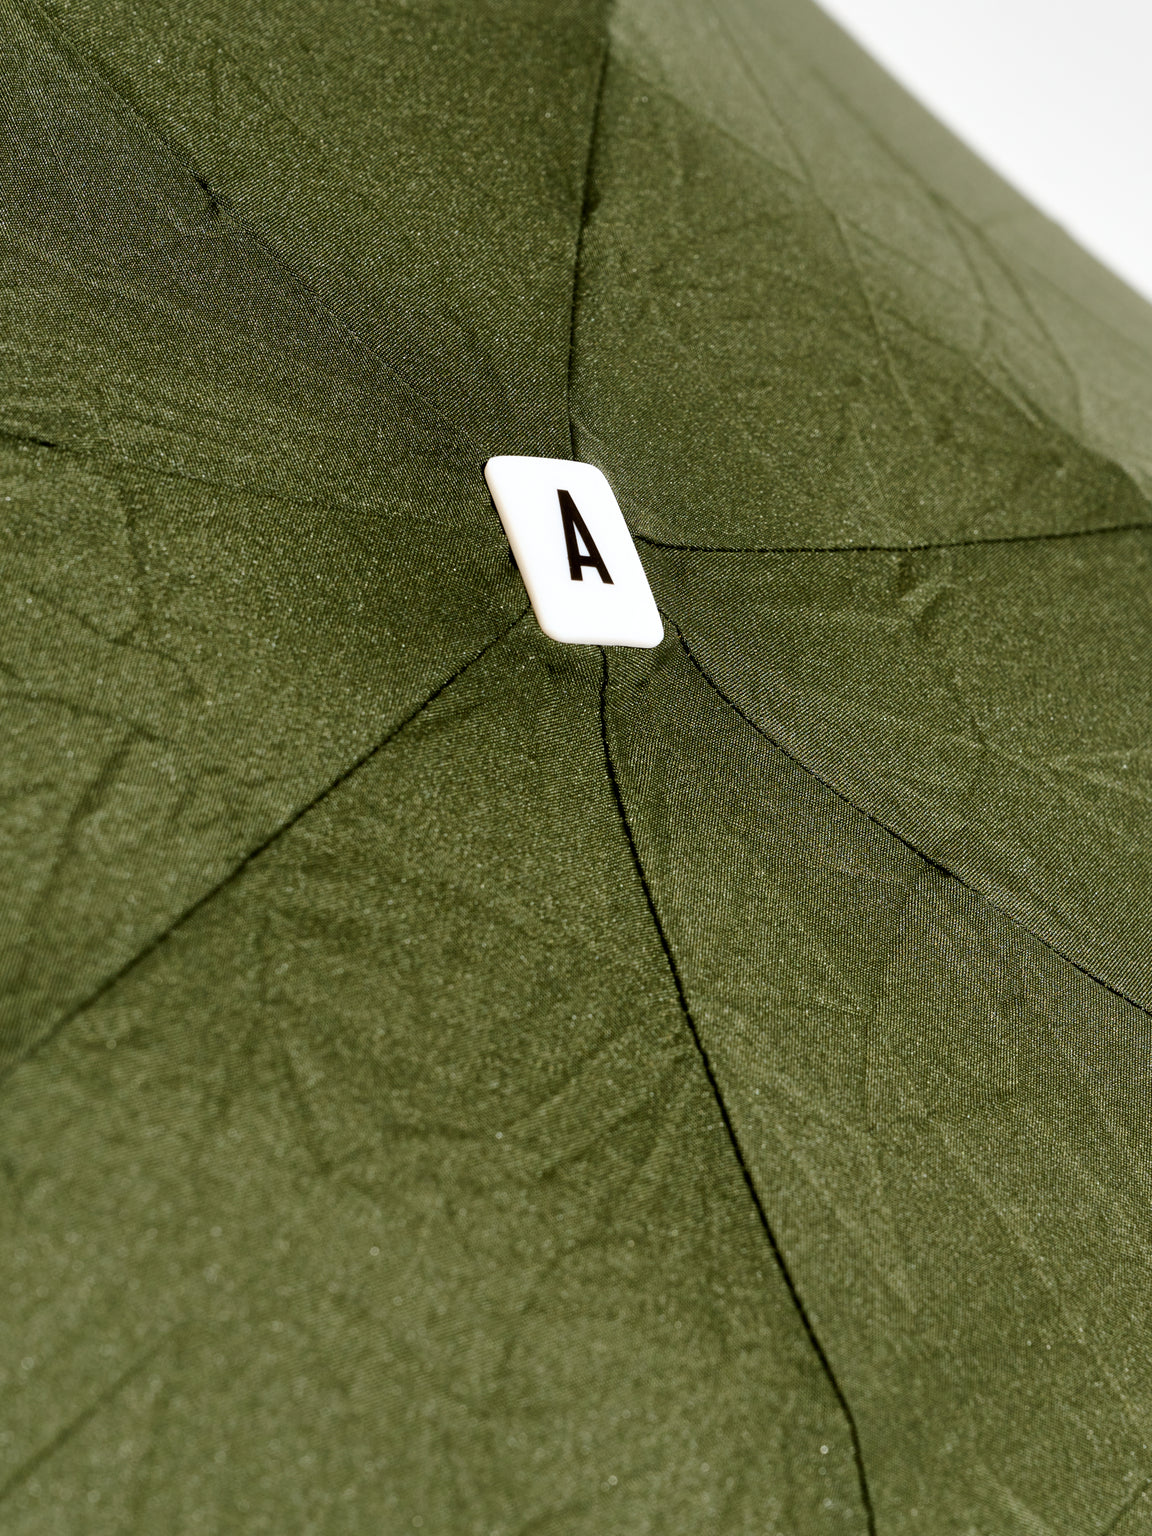 Parapluie de poche Anatole - kaki LEONARD